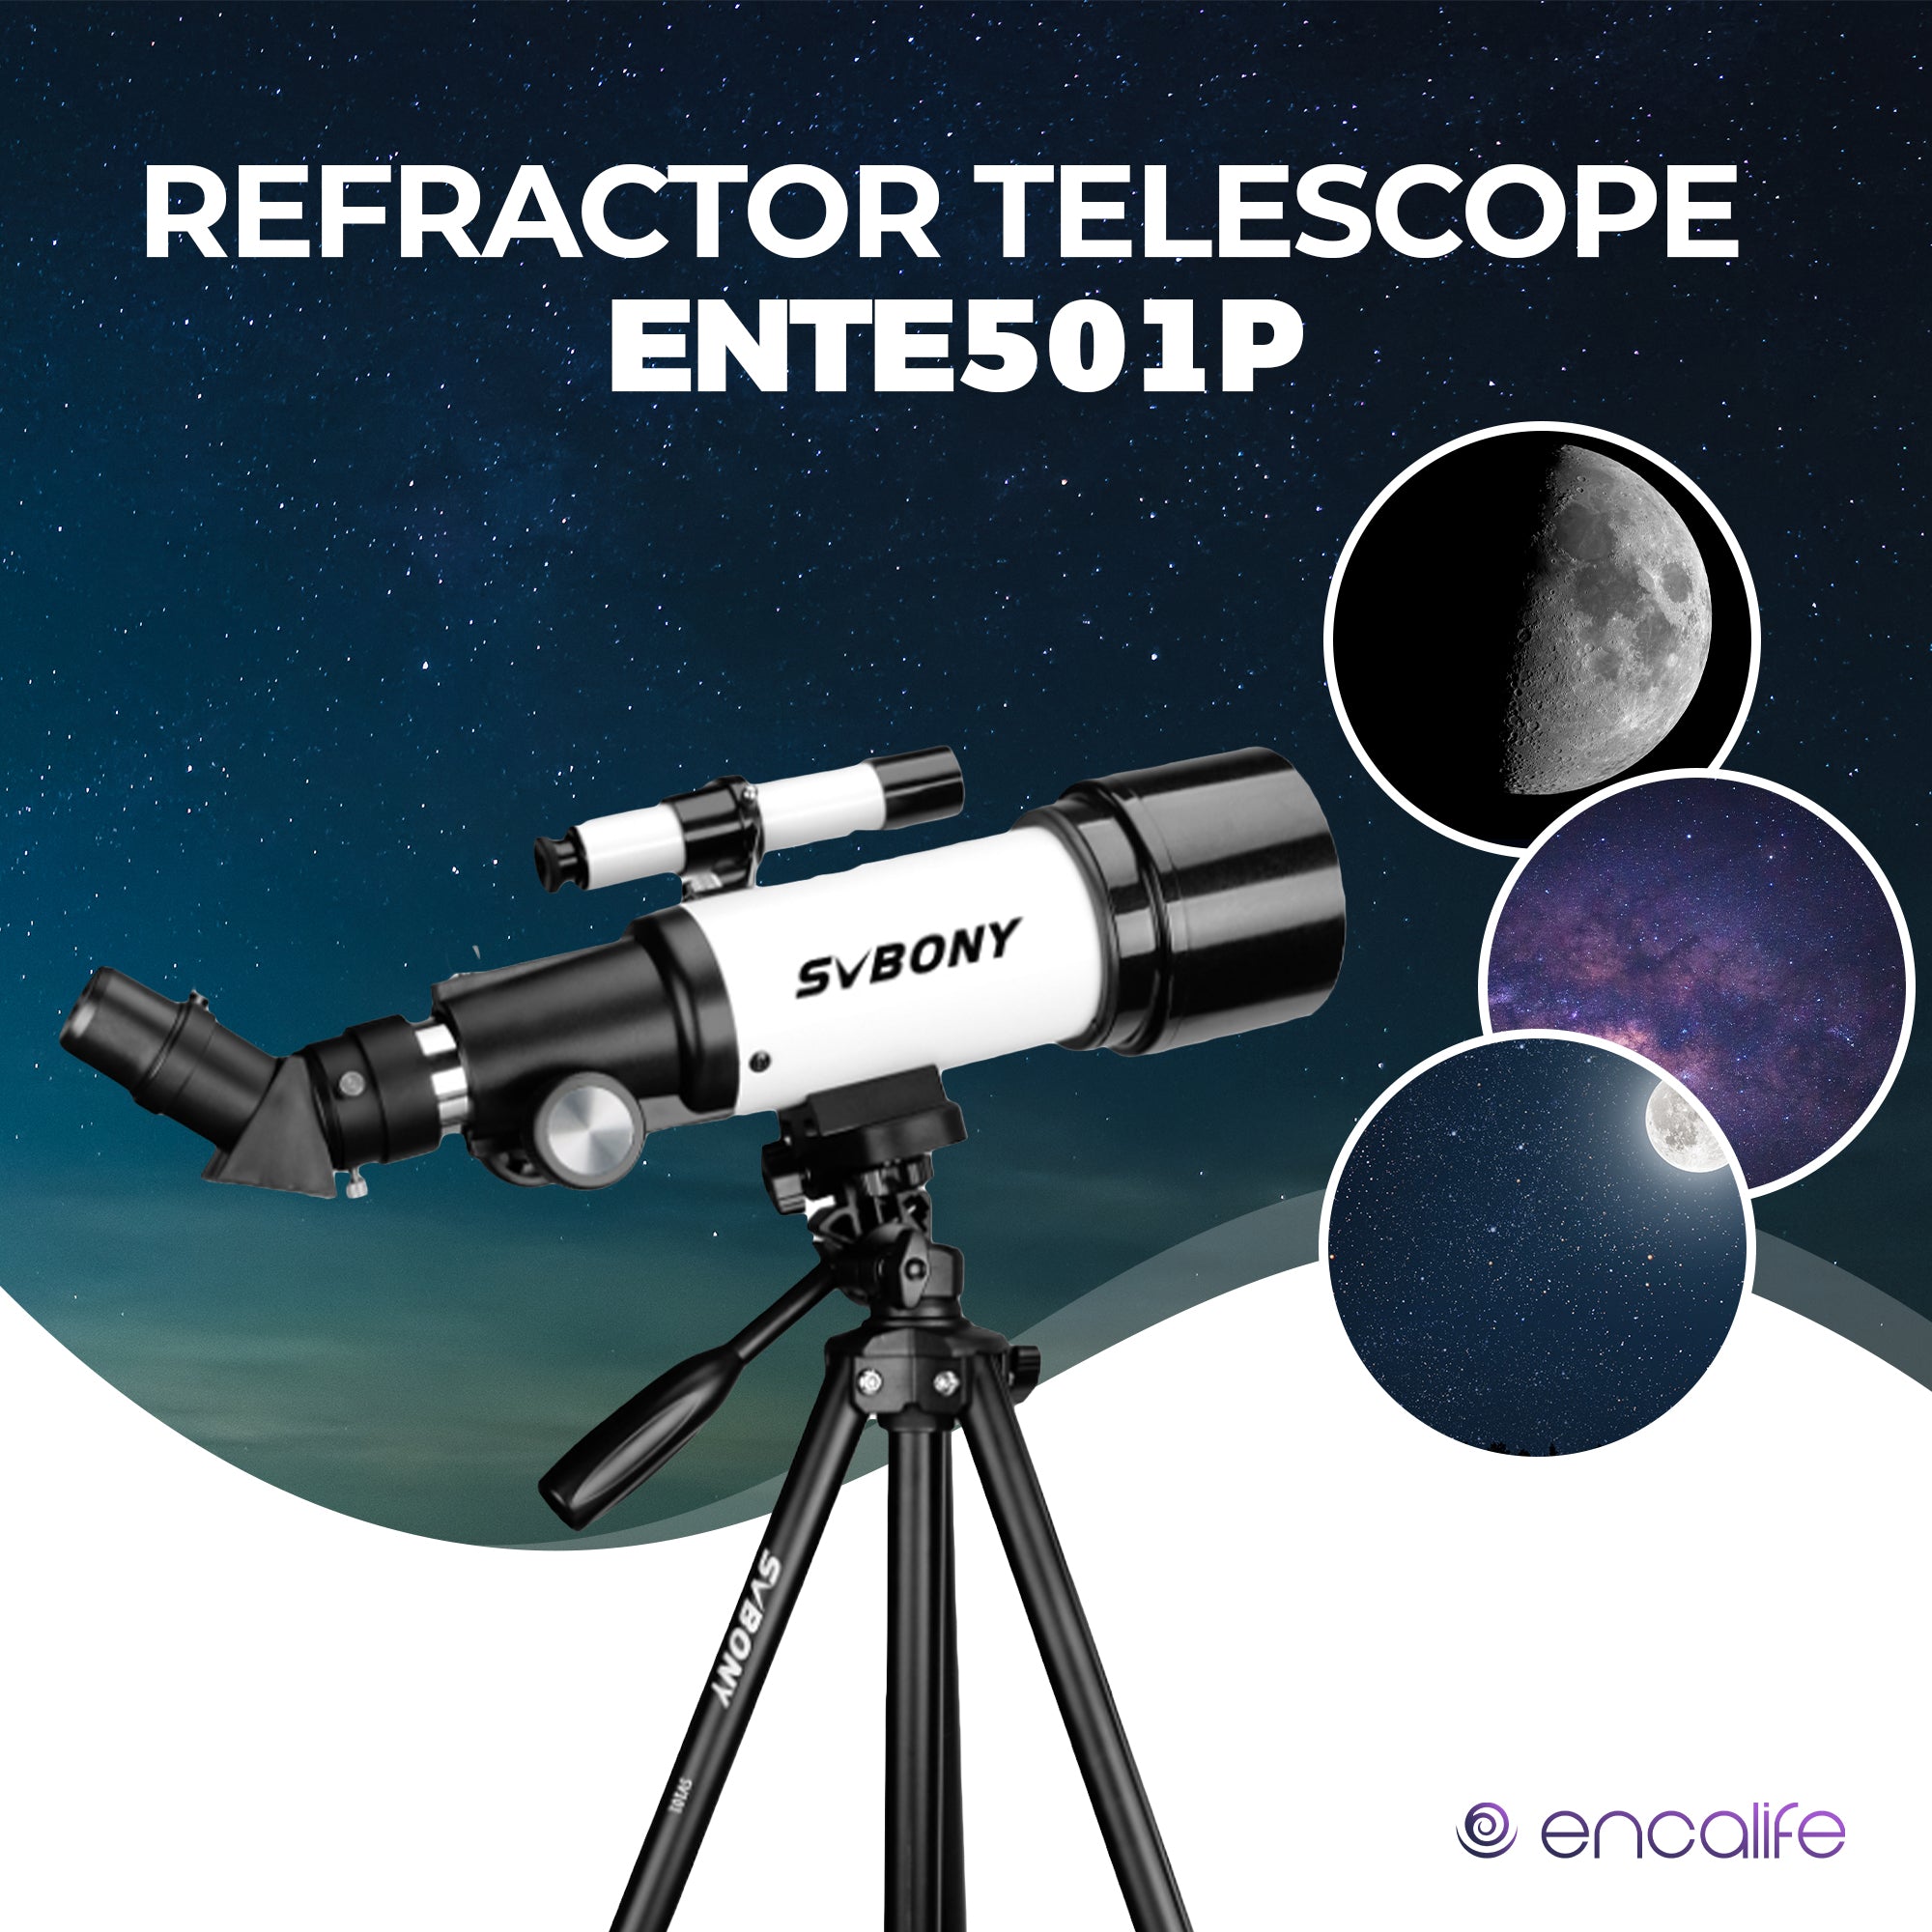 Refractor Telescope ENTE501P pic